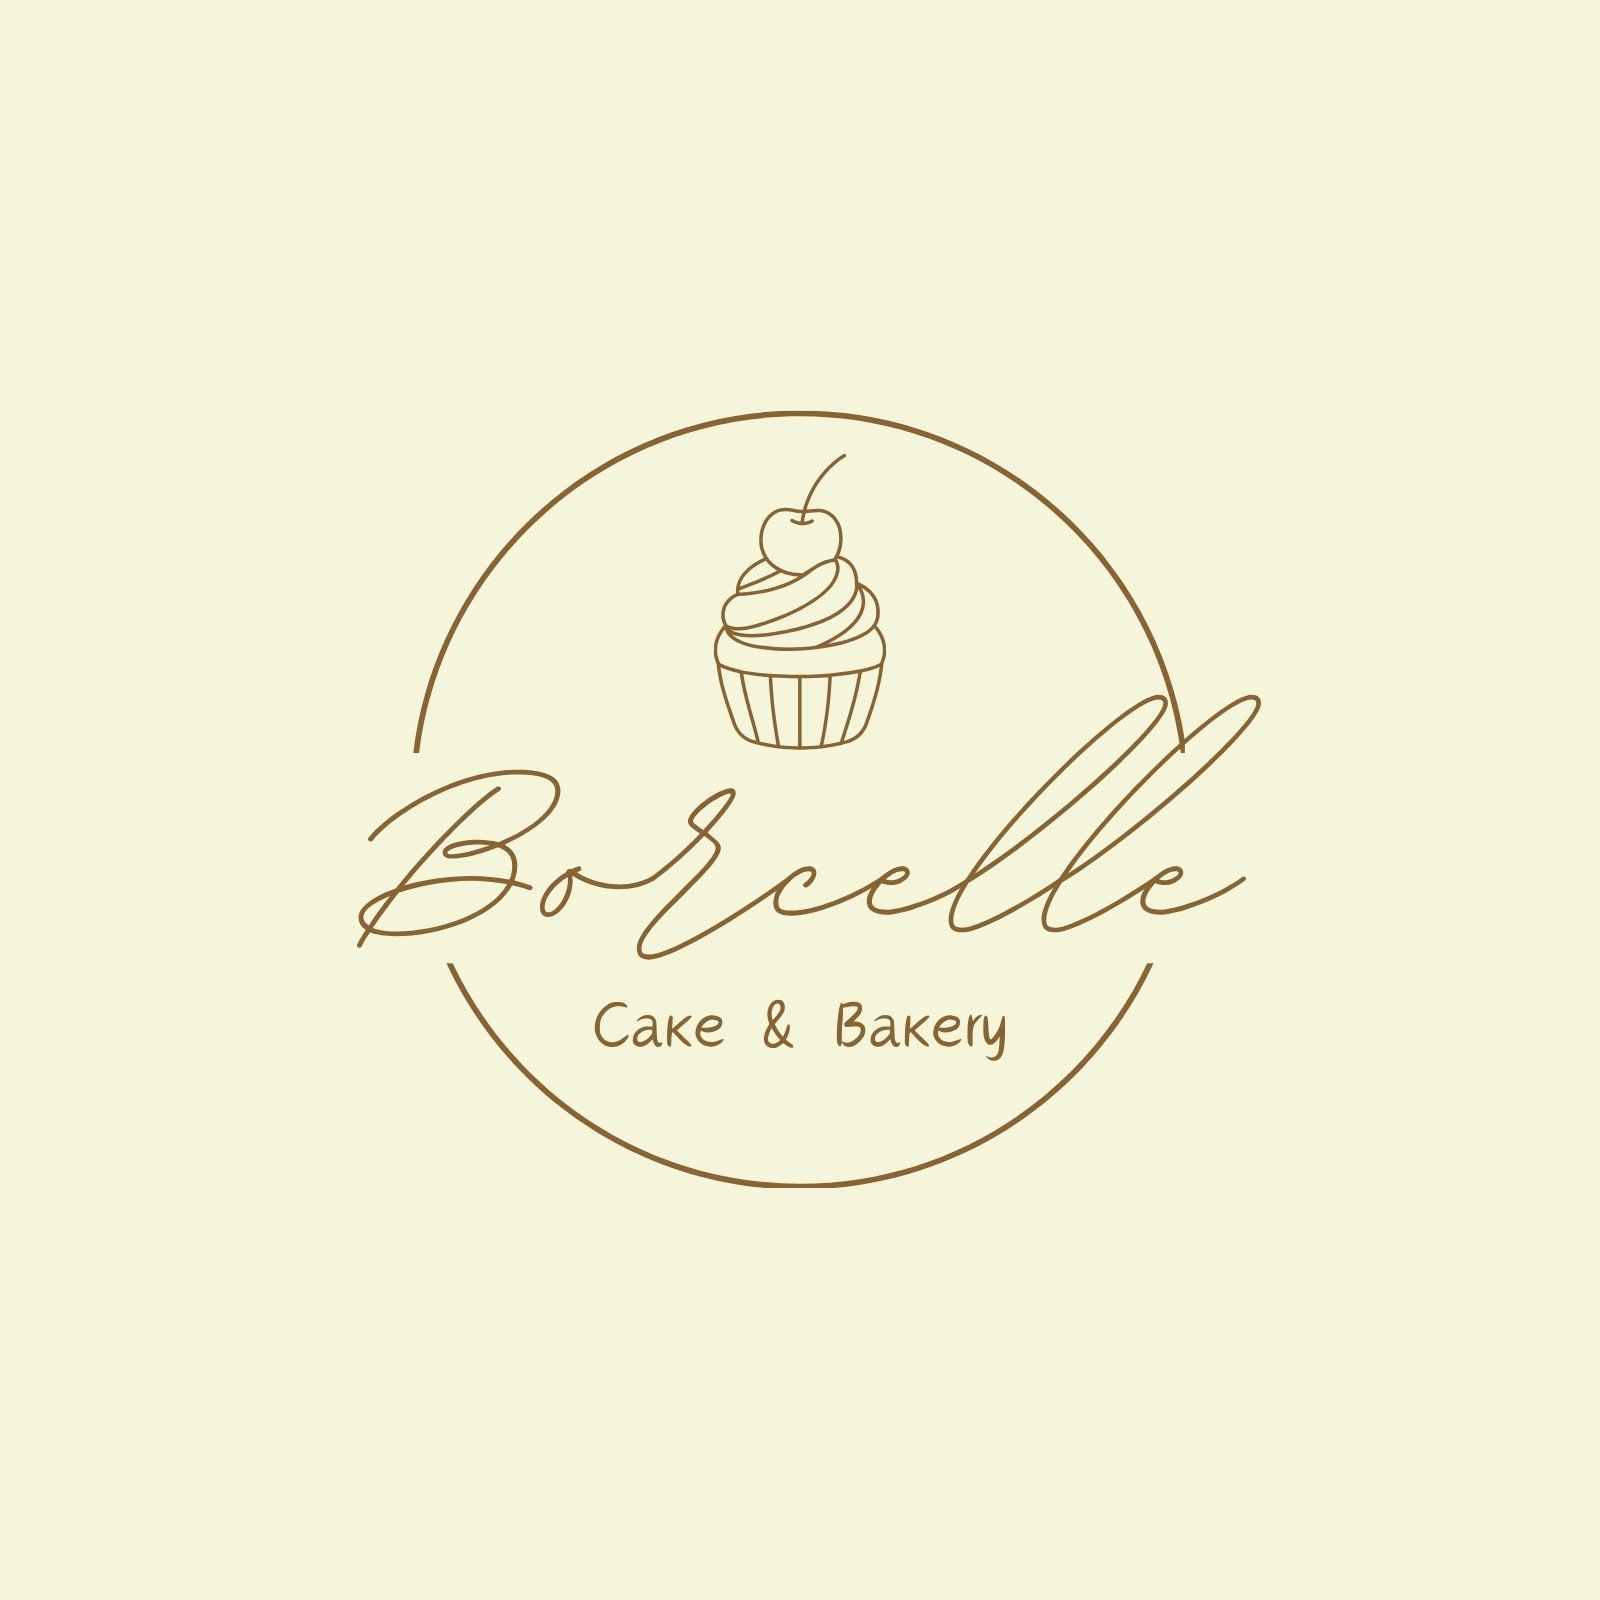 https://marketplace.canva.com/EAF2XKDwKTc/1/0/1600w/canva-beige-and-brown-minimalist-script-modern-cake-%26-bakery-circle-logo-gUF6aTRyZrY.jpg